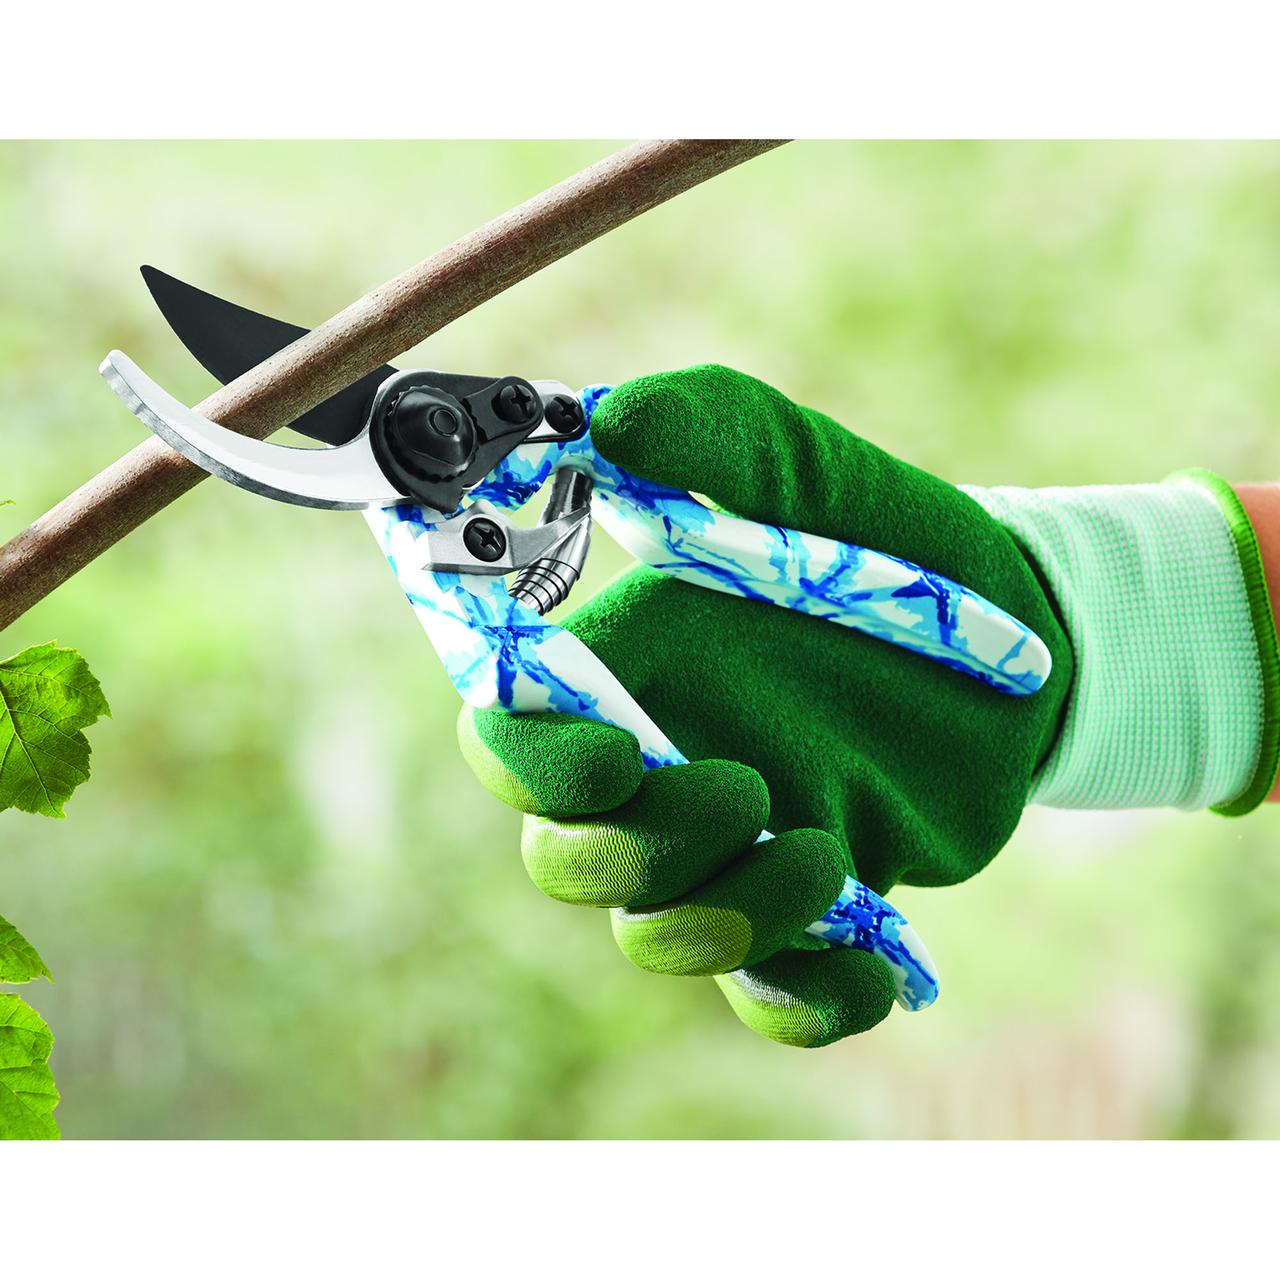 Expert Gardener Shibori Gardening Tool Set with Carrying Case (23 Pieces) - image 5 of 6